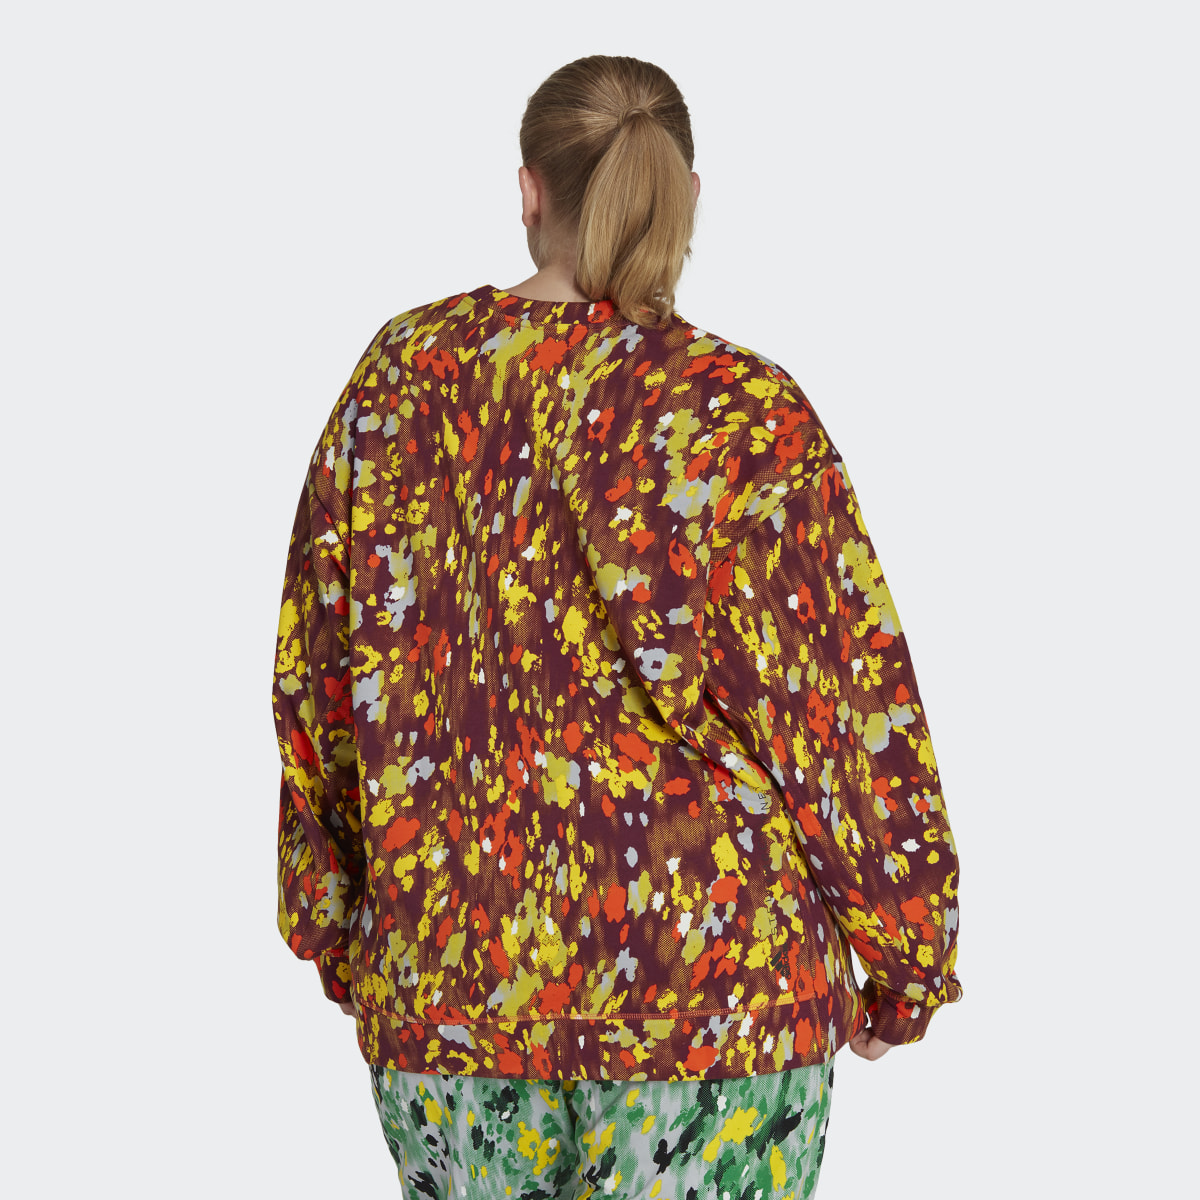 Adidas by Stella McCartney Floral Print Sweatshirt - Plus Size. 3